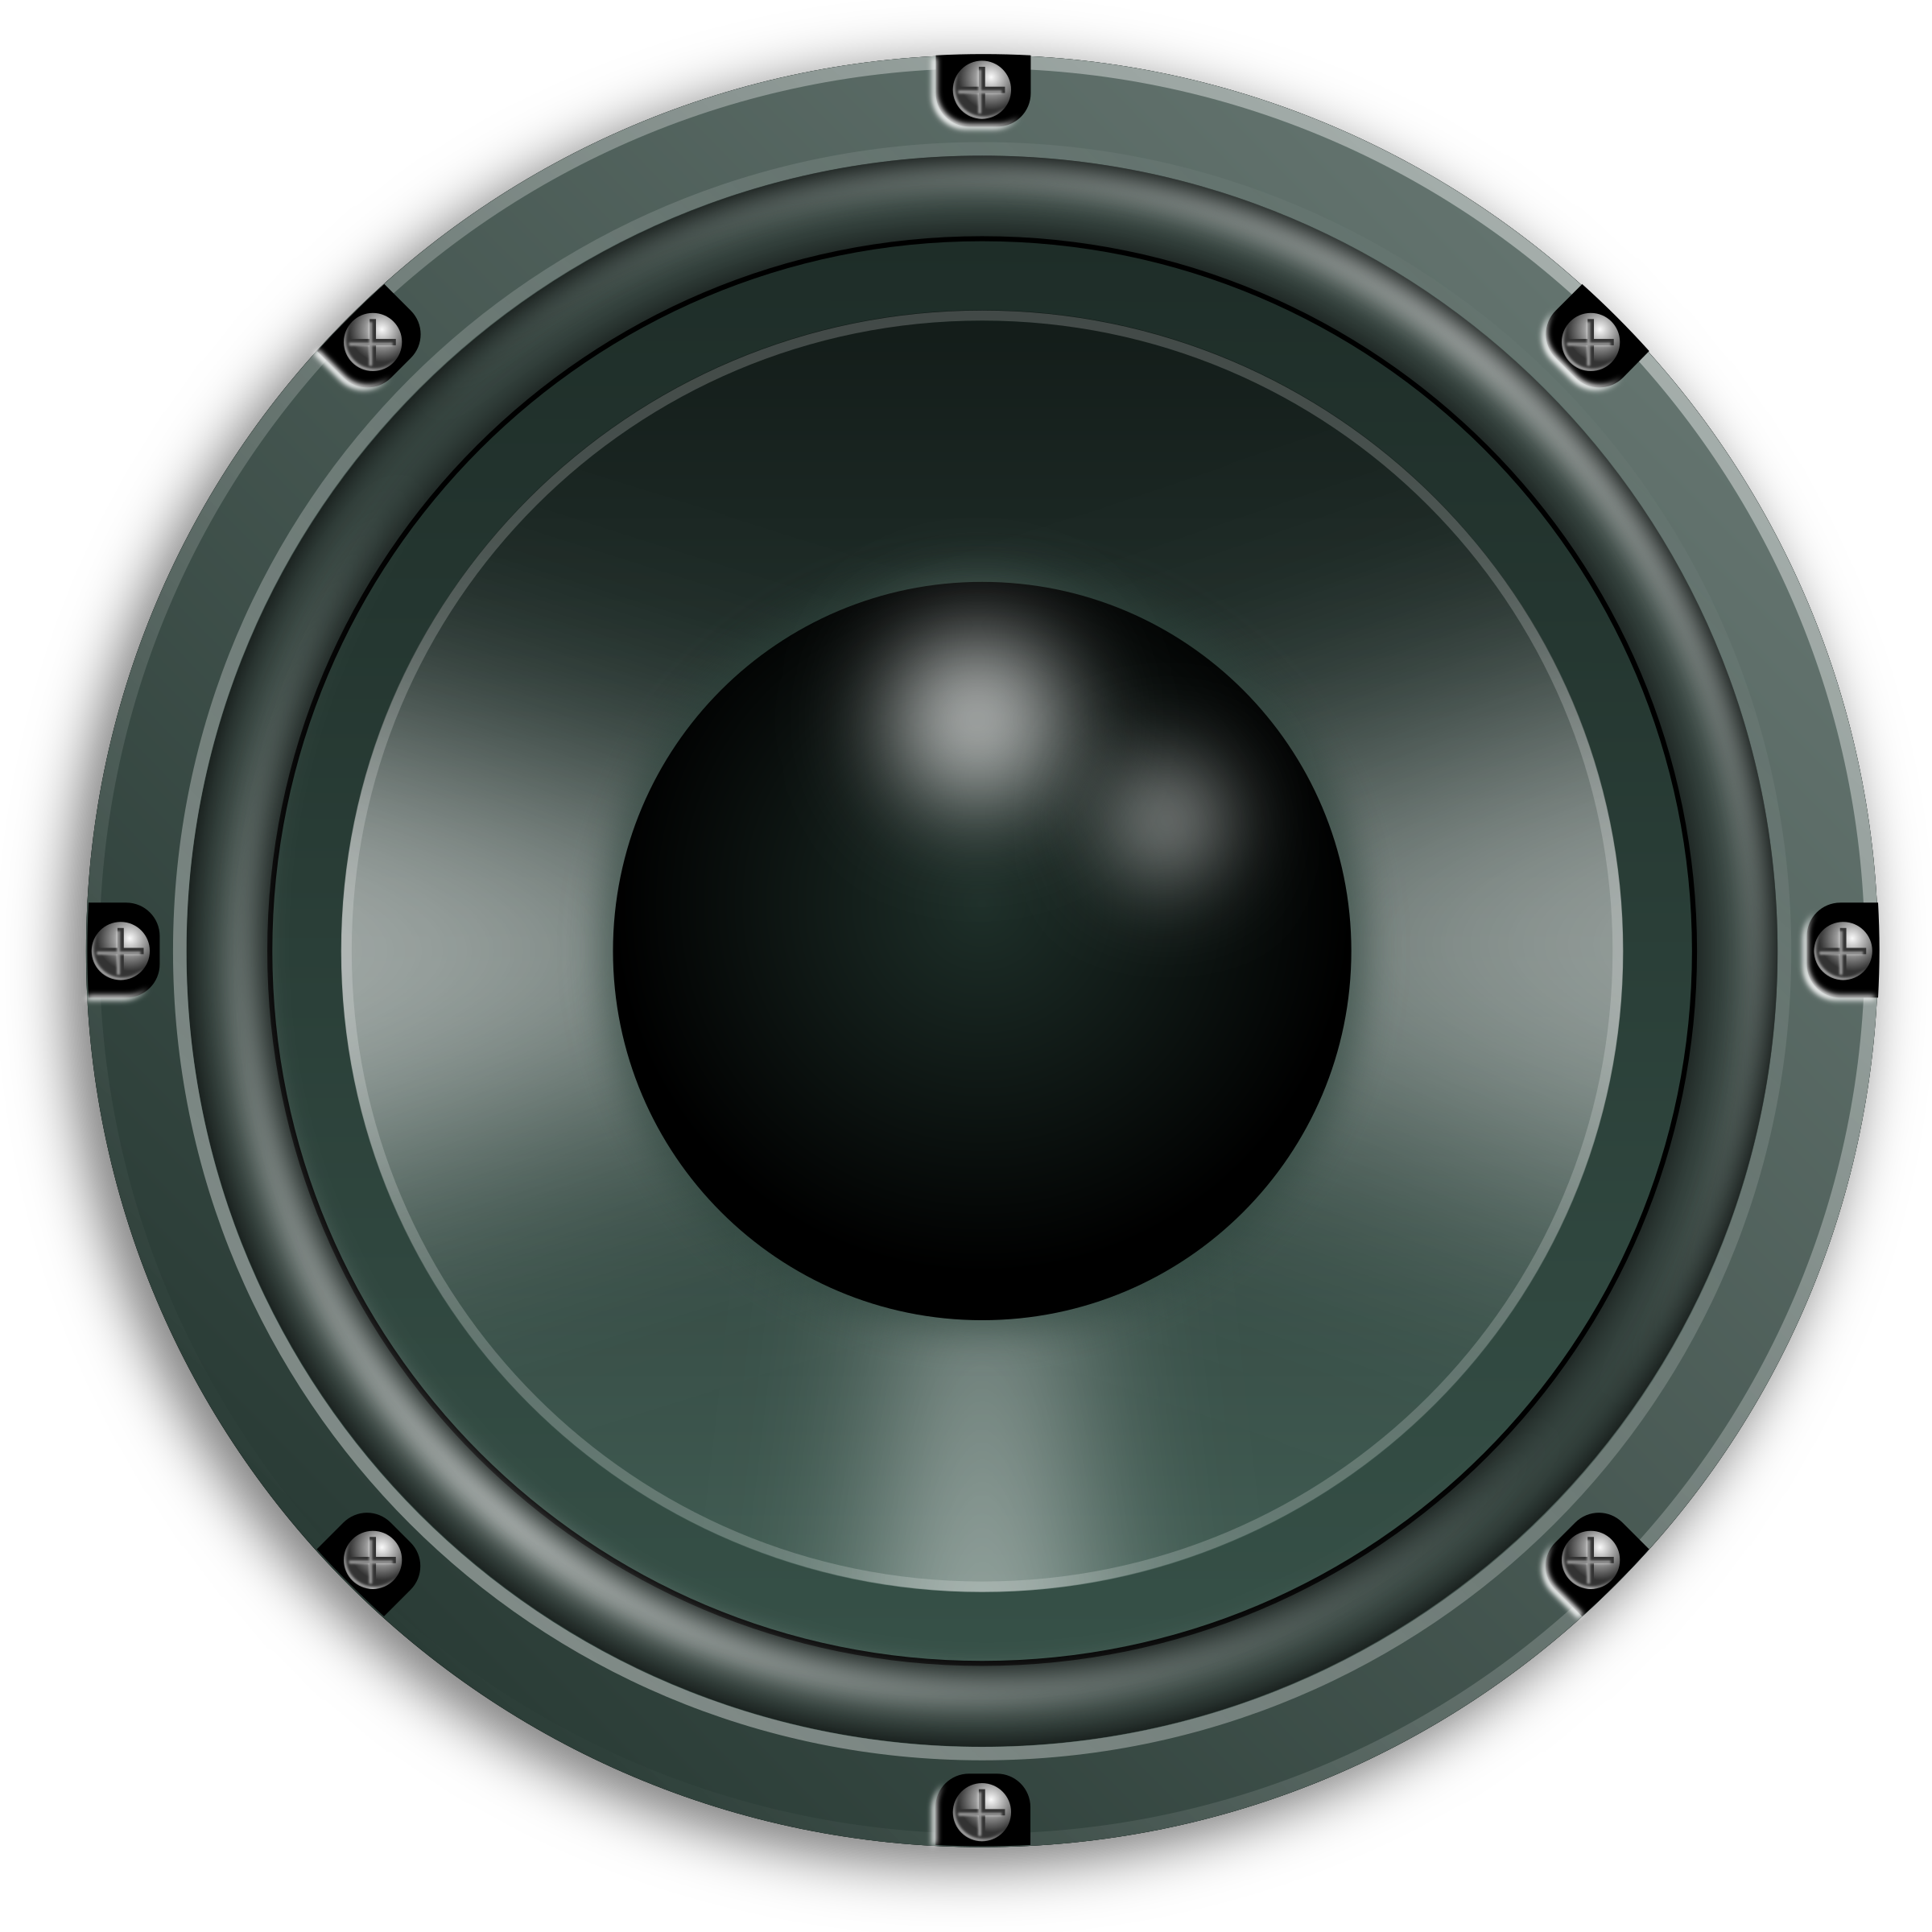 Bass Audio Speakers Black PNG